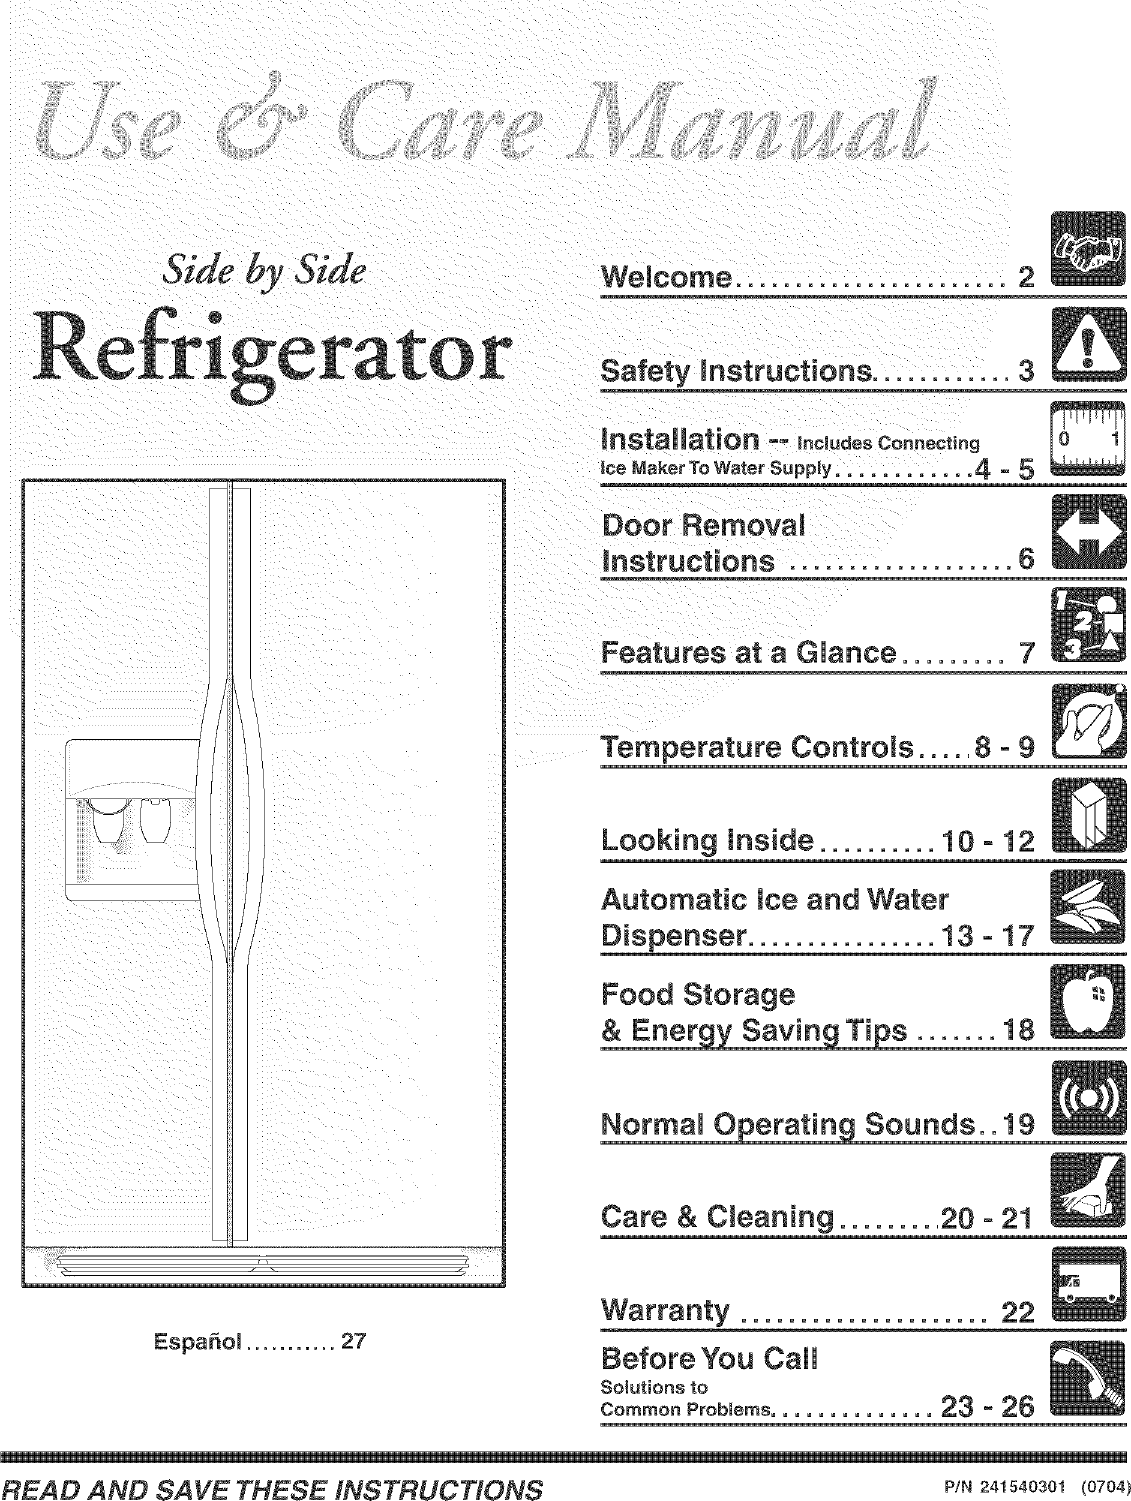 Jsi 26 Frigidaire Refrigerator Manual